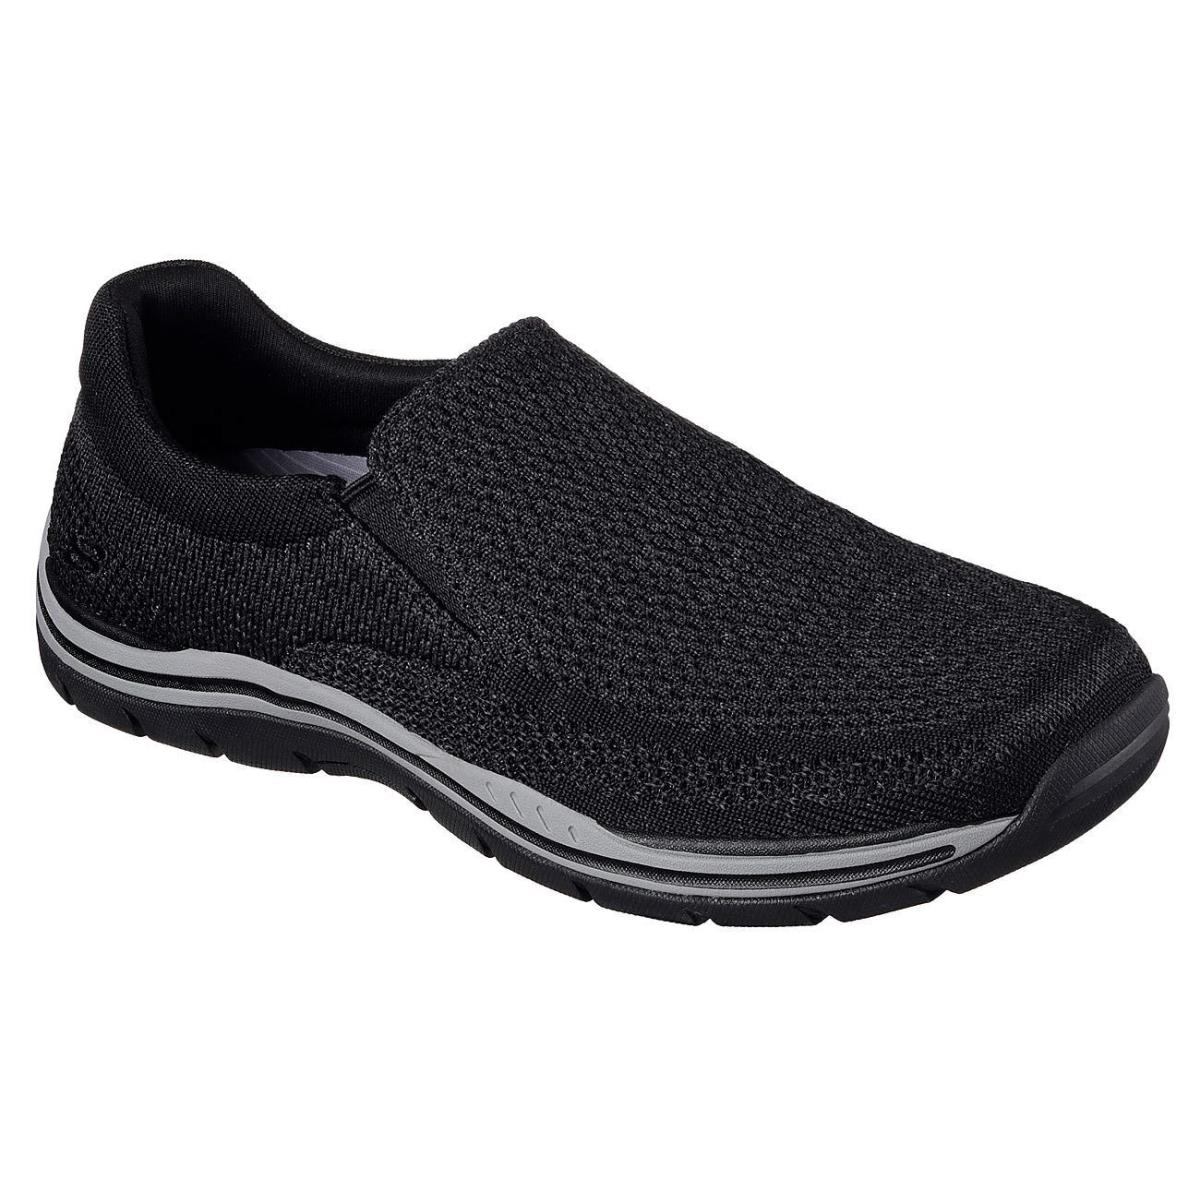 Men`s Skechers Relaxed Expected Gomel Loafer Shoes 65086 /blk Sizes 8-14 Black - Black